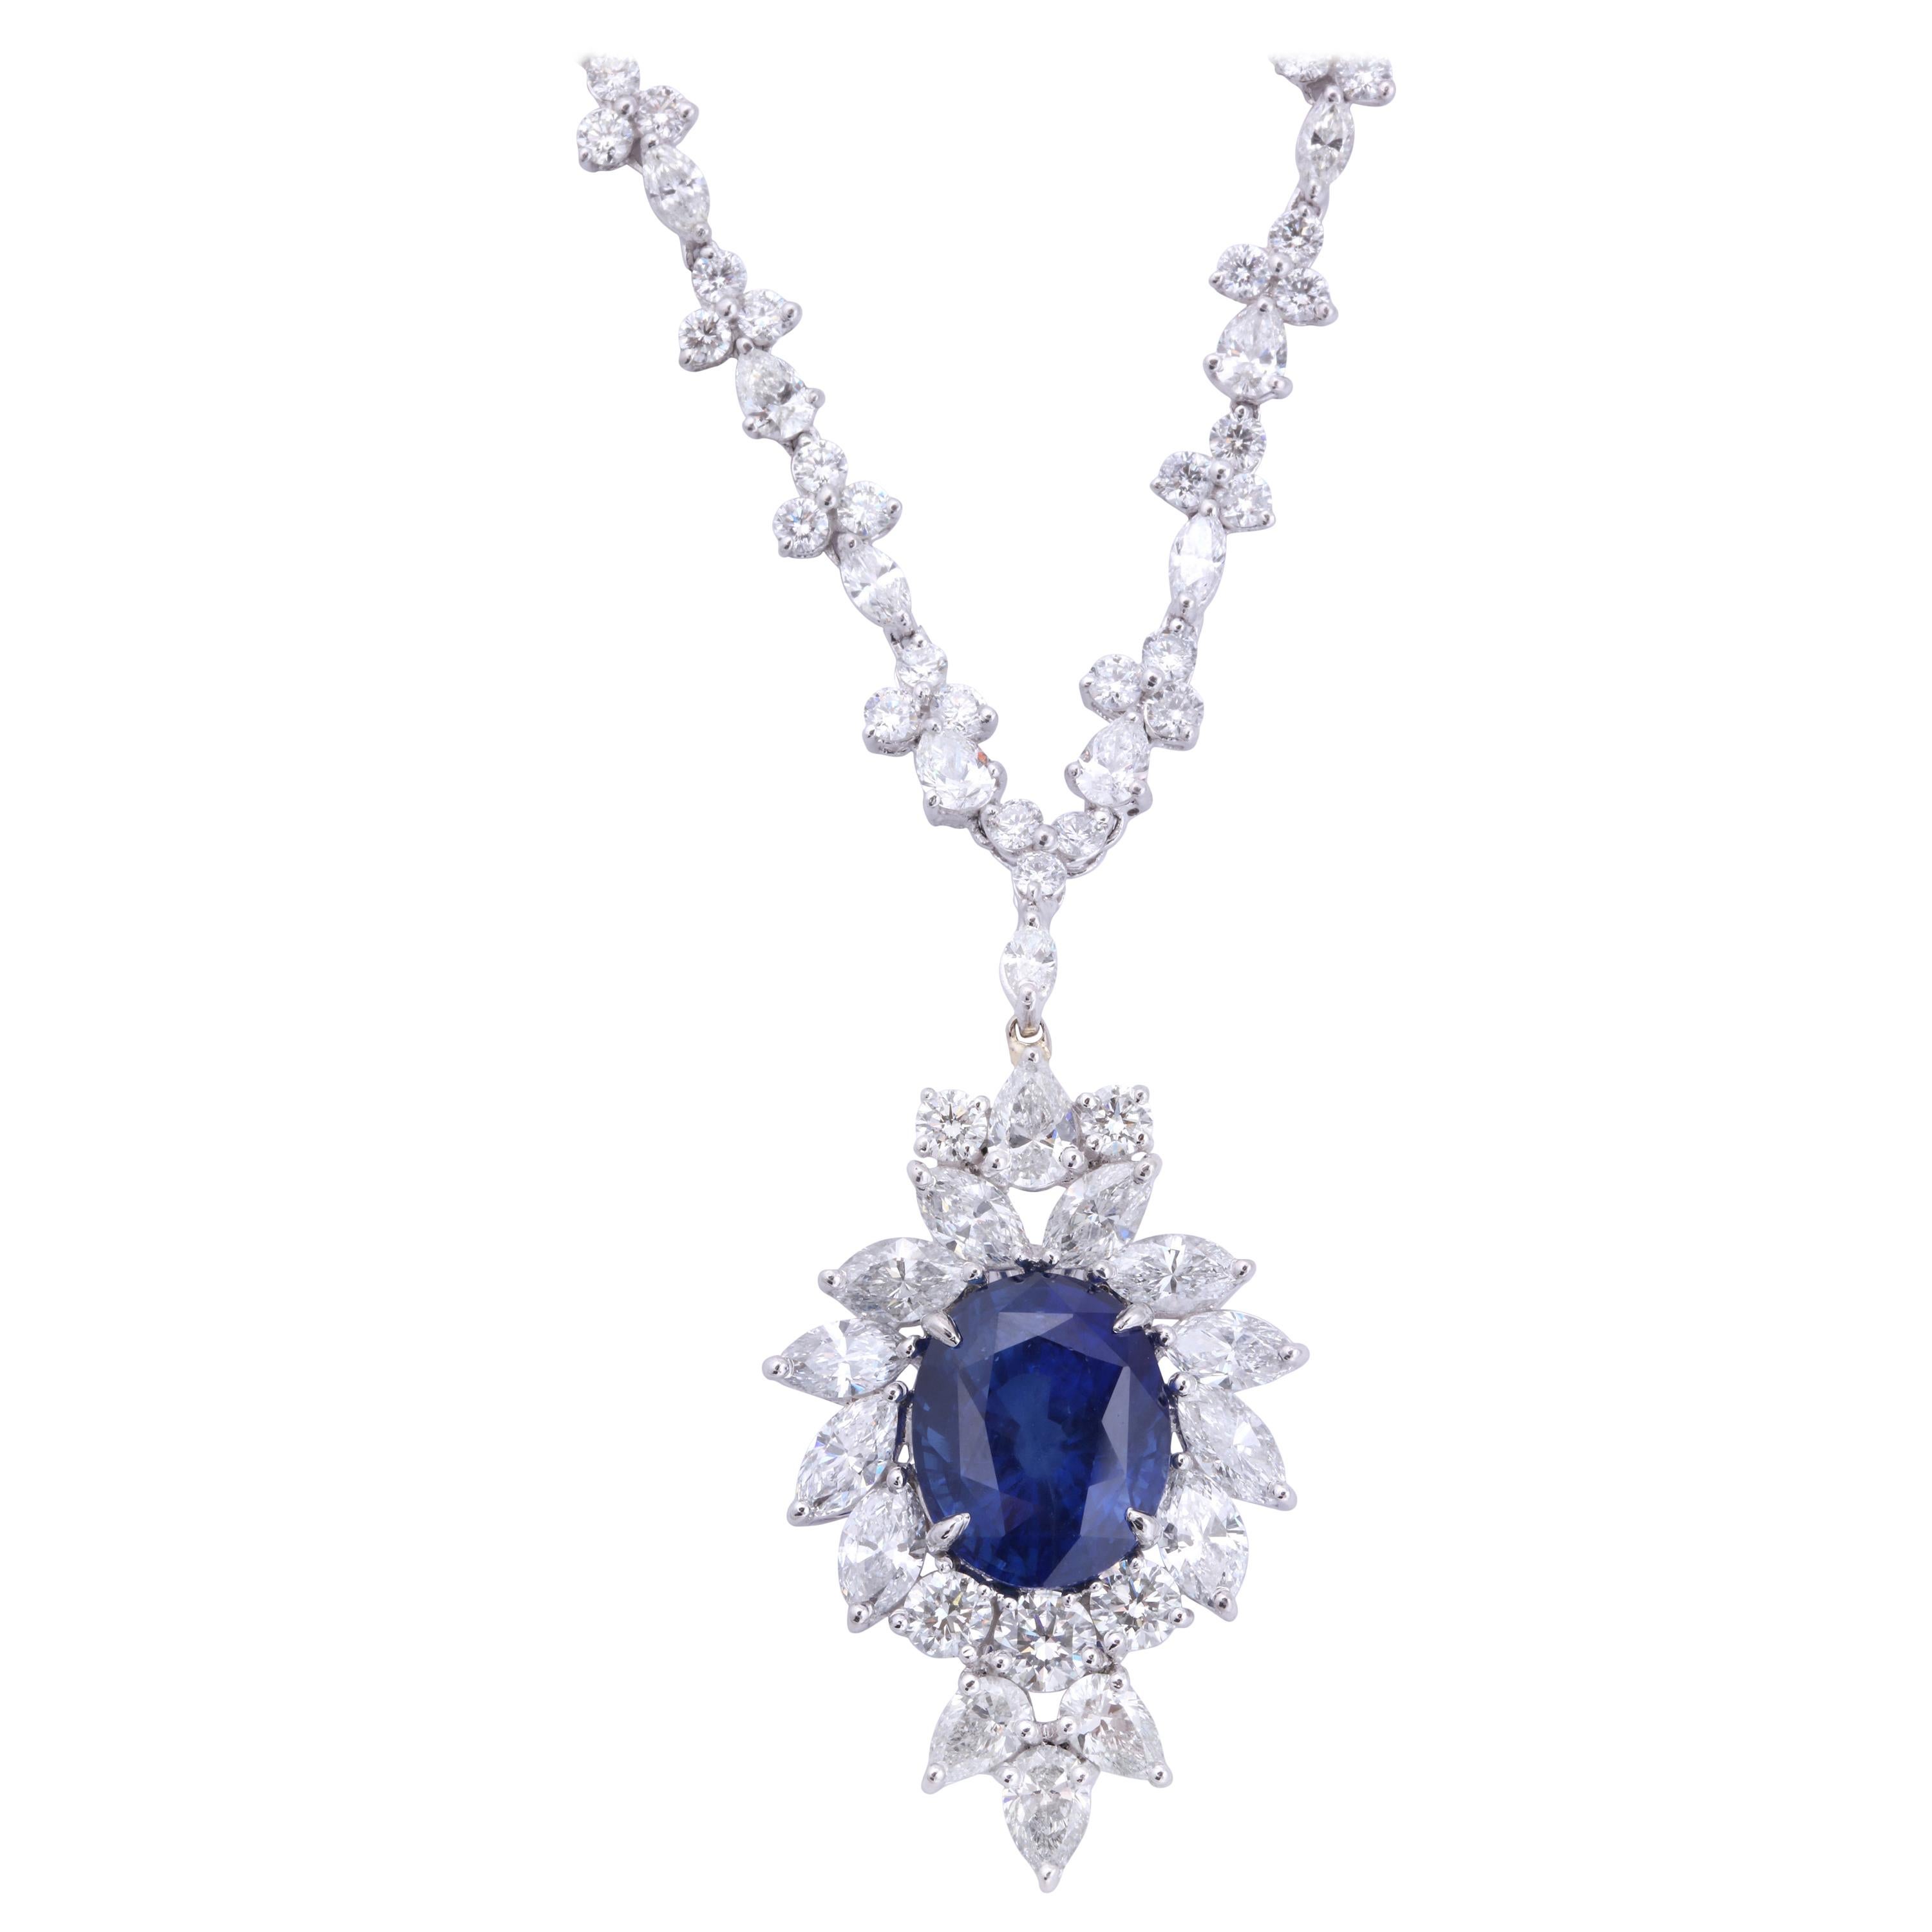 Vivid Blue Ceylon Sapphire and Diamond Pendant Necklace